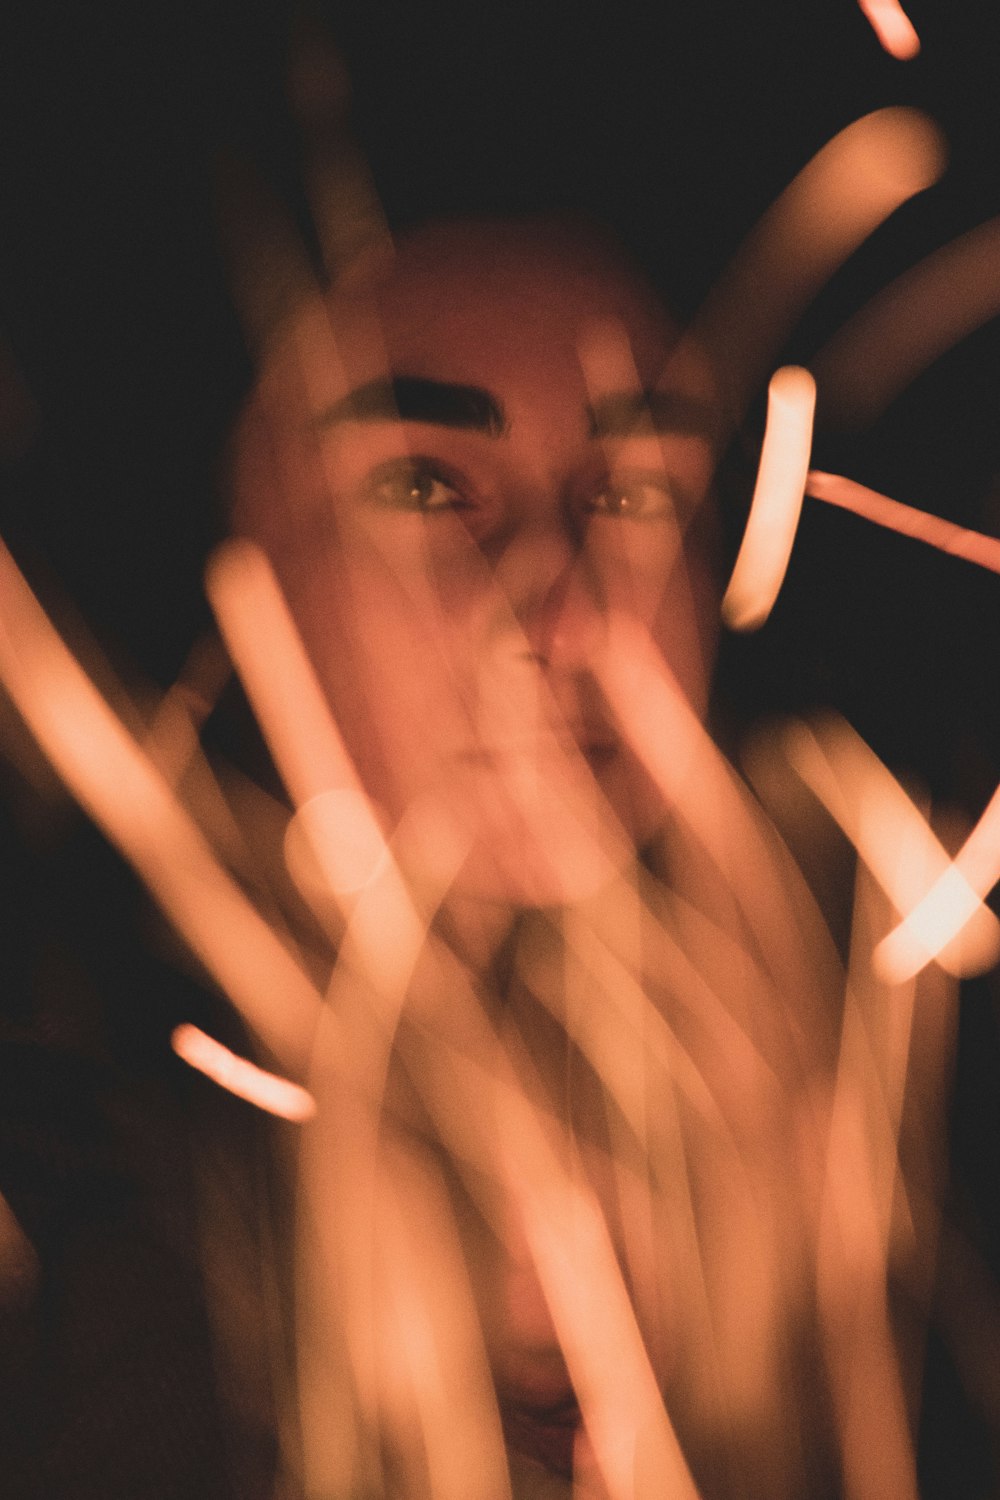 a blurry photo of a man making a face